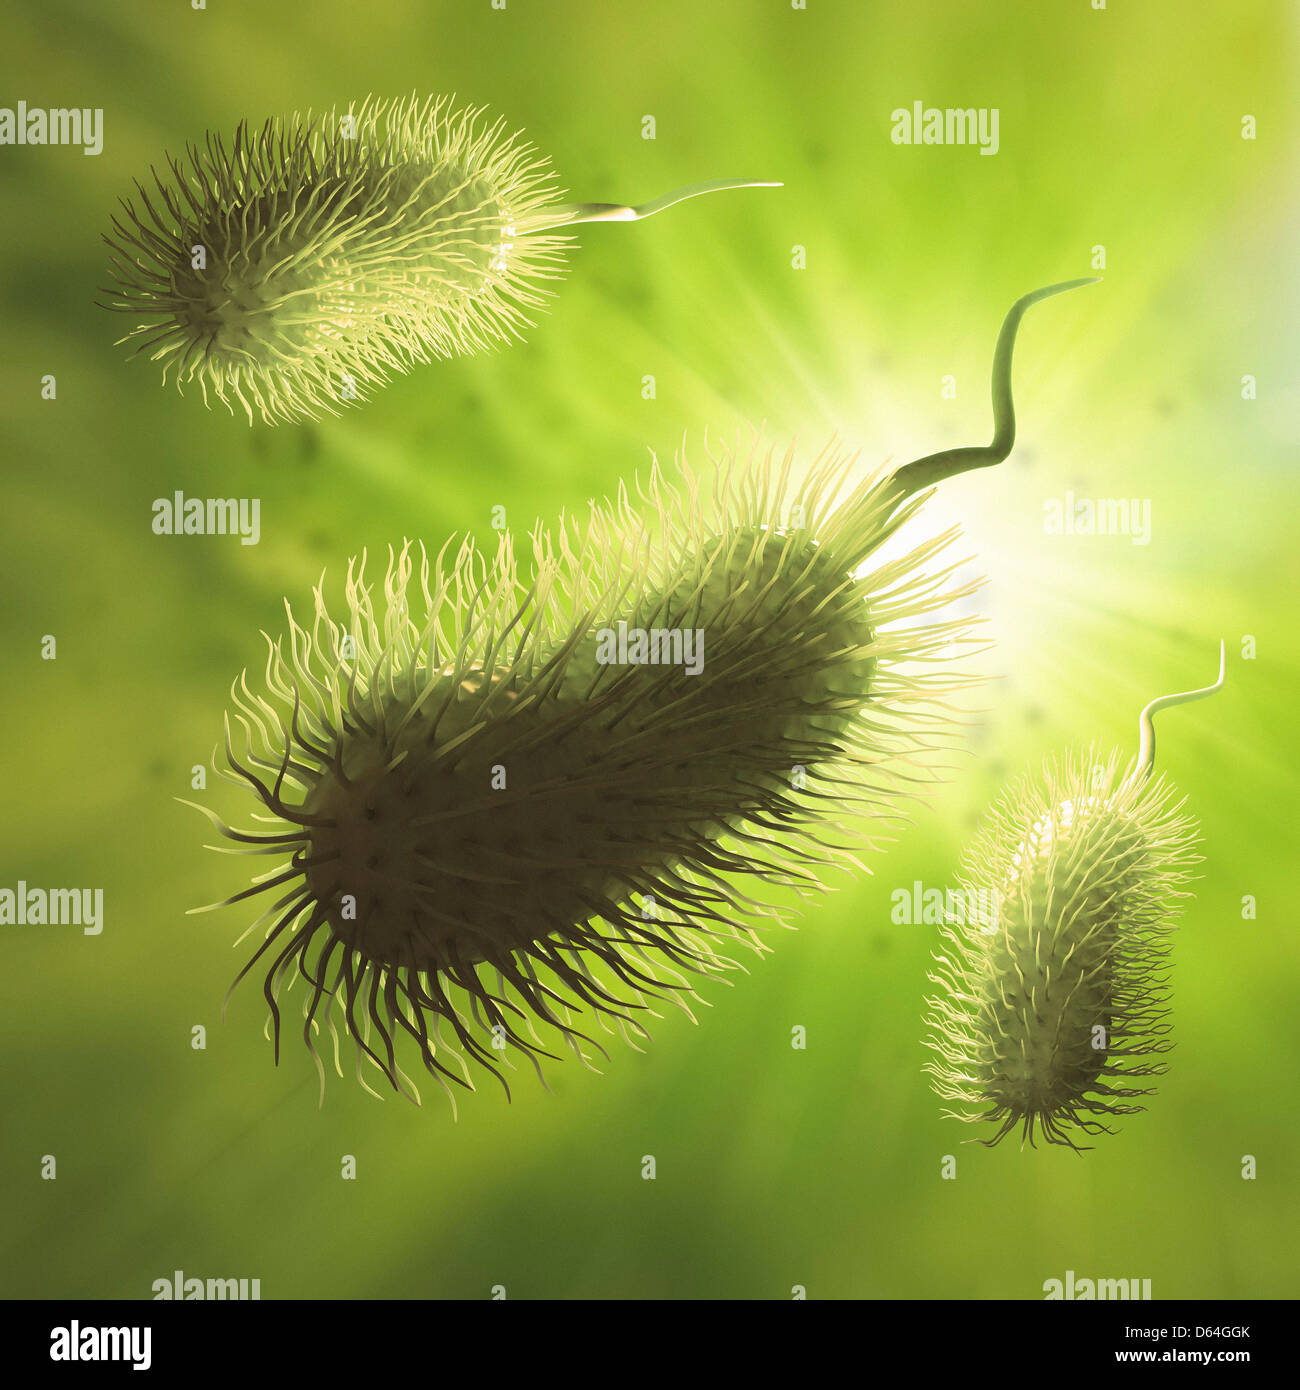 Bacteria, artwork Stock Photo